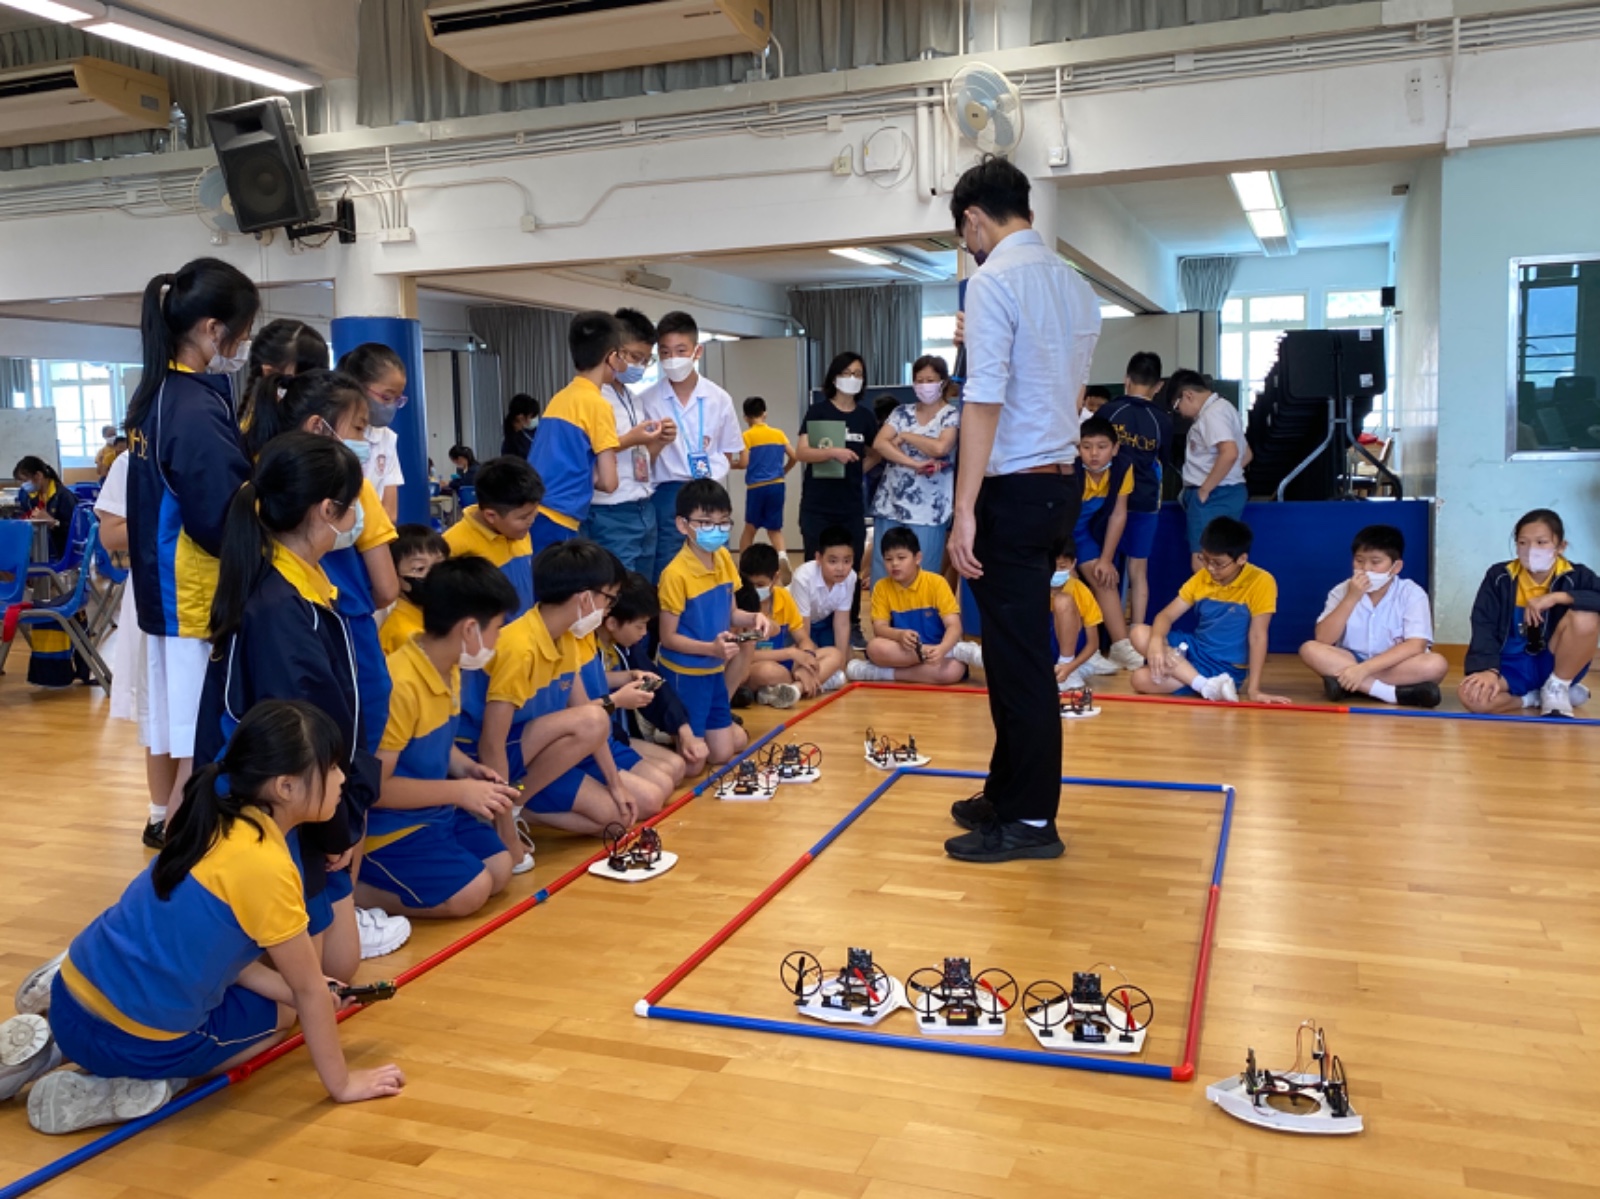 Hovercraft Fun Day - PLK Siu Hon-Sum Primary School